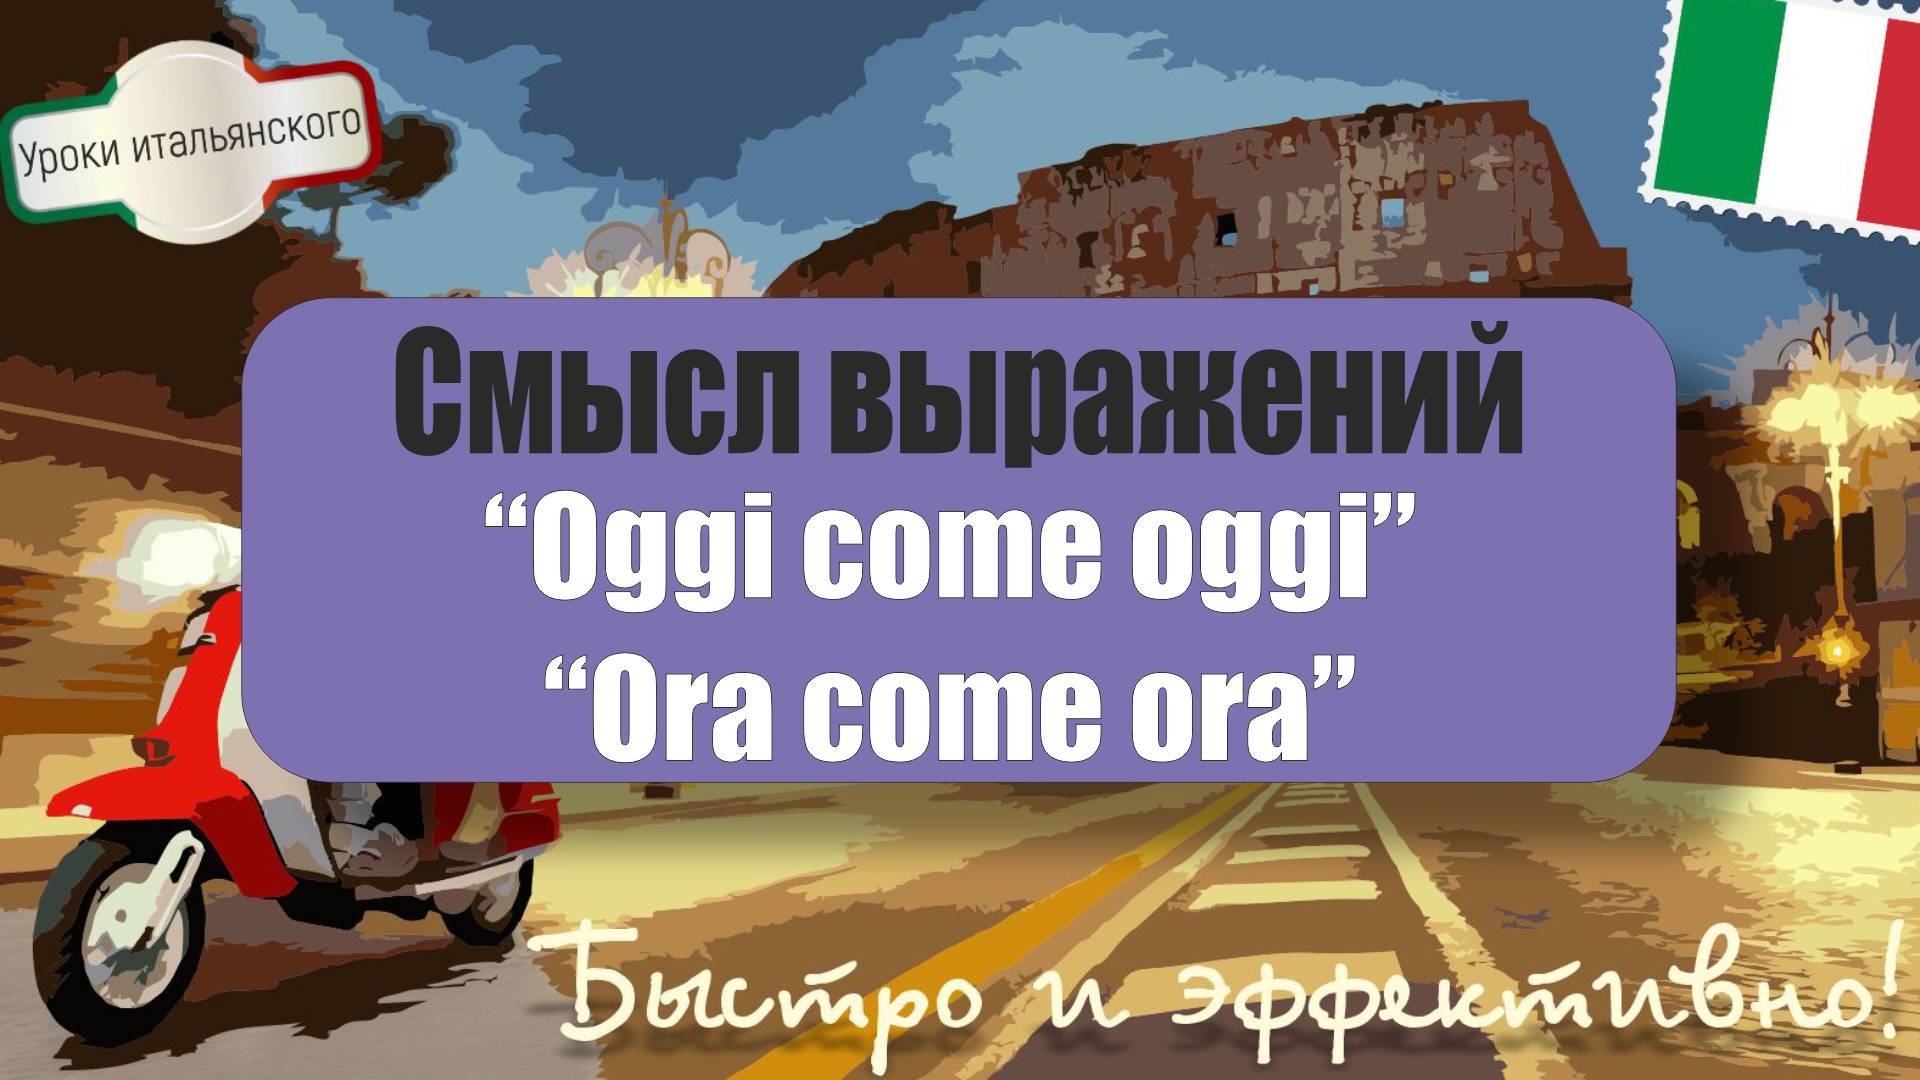 🇮🇹 Урок Итальянского: Смысл выражений "Oggi come oggi" и "Ora come ora"  #OggiComeOggi #OraComeOra